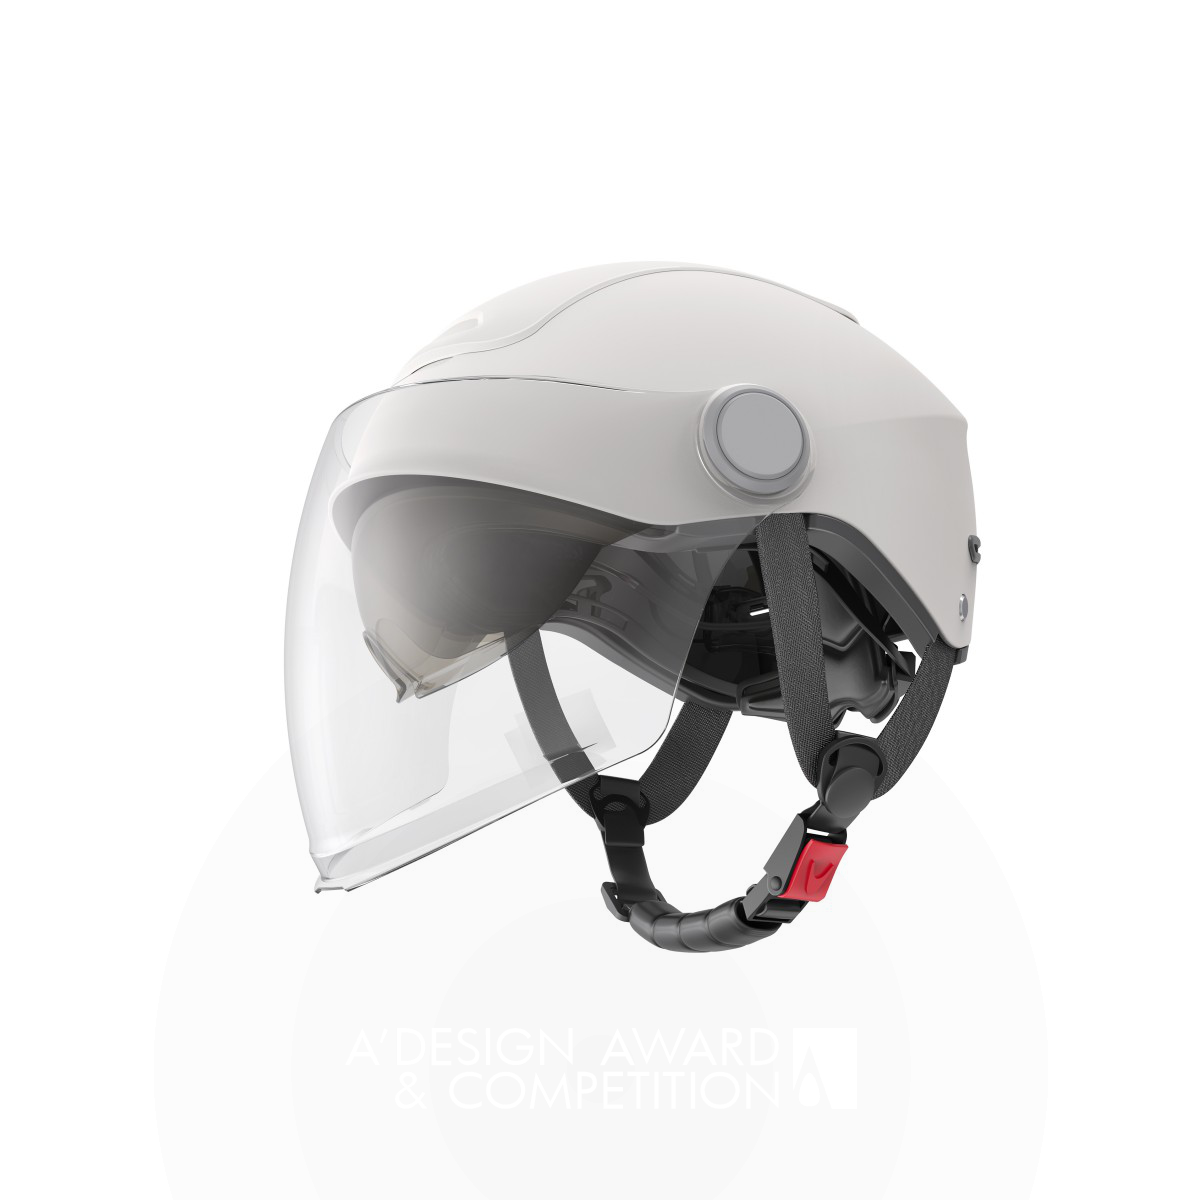 Hangzhou Bee Sports Co., Ltd. Helmet